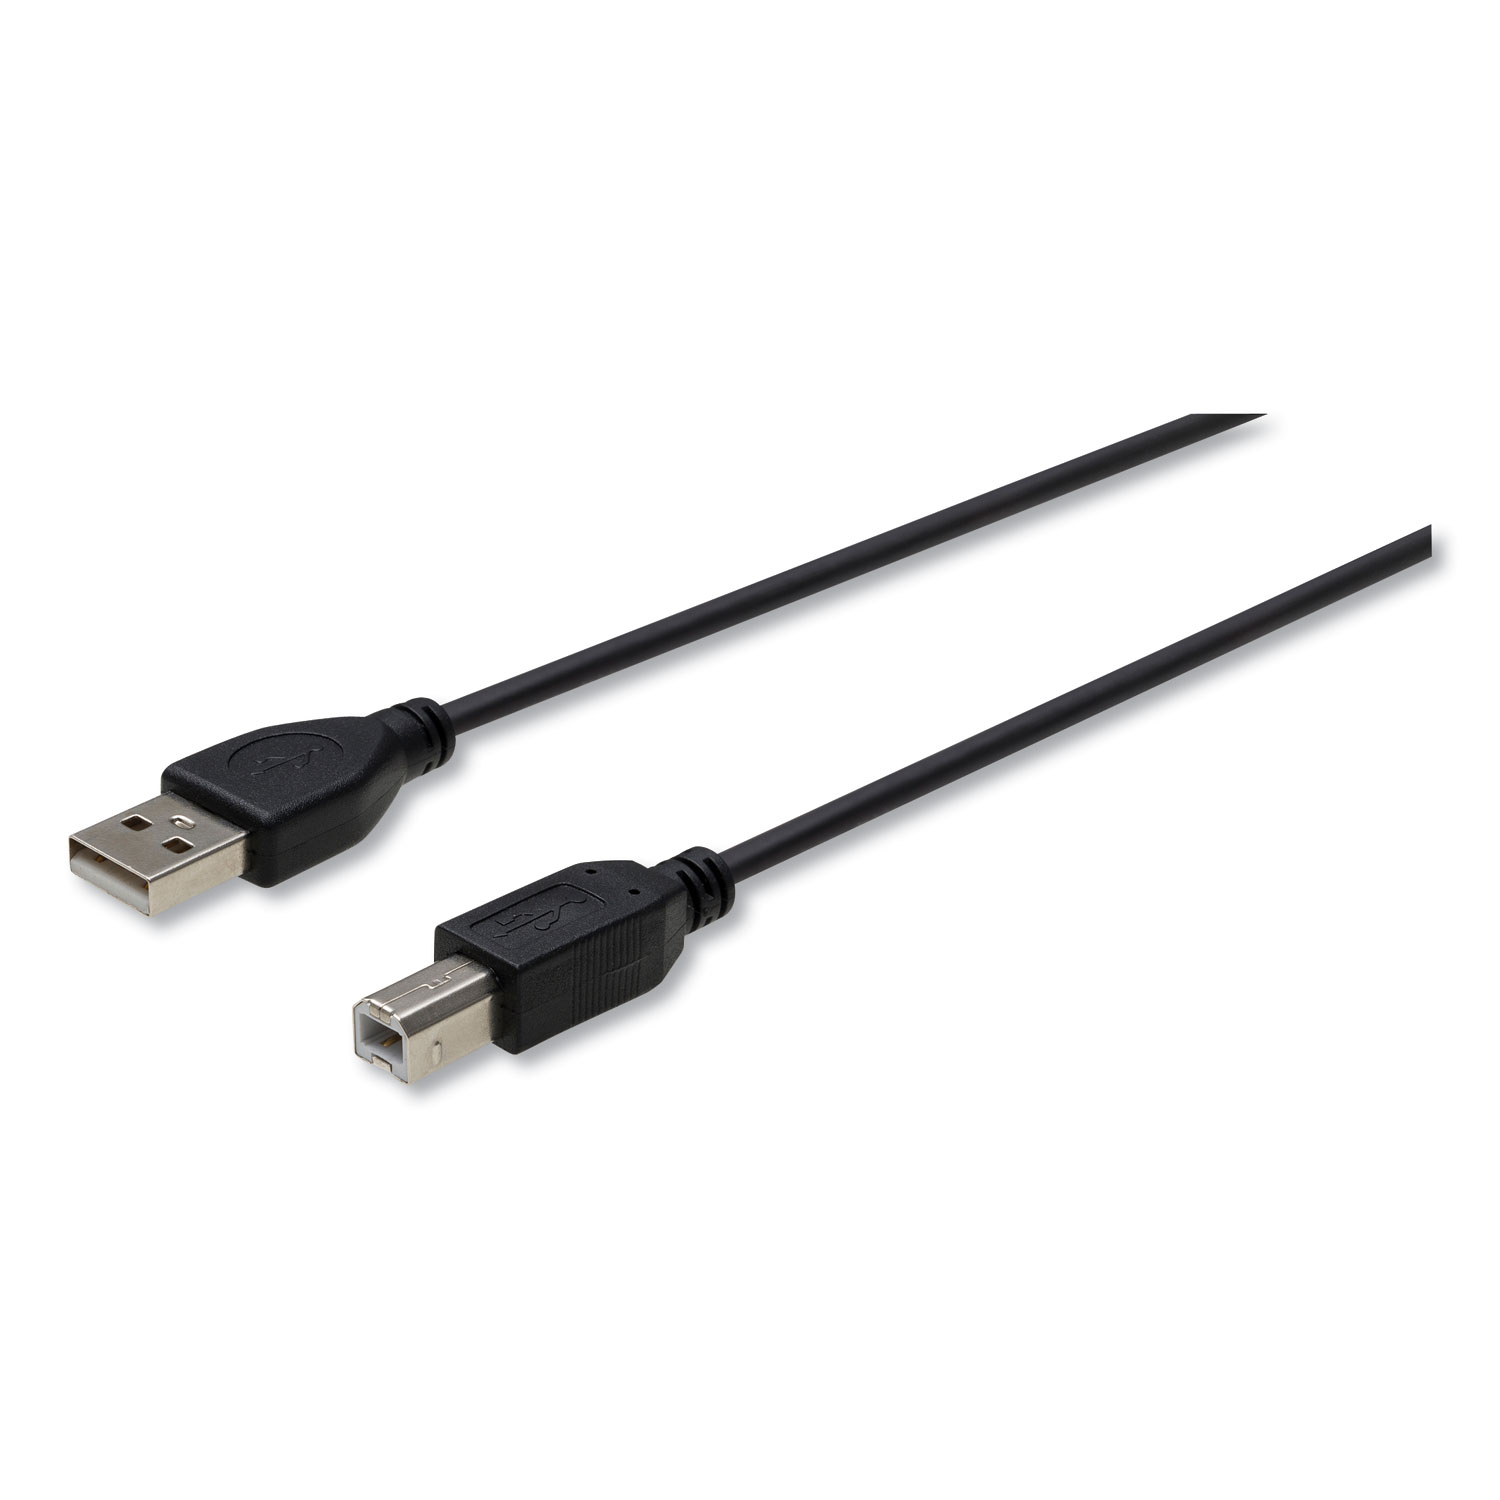  Innovera IVR30005 USB Cable, 10 ft, Black (IVR30005) 